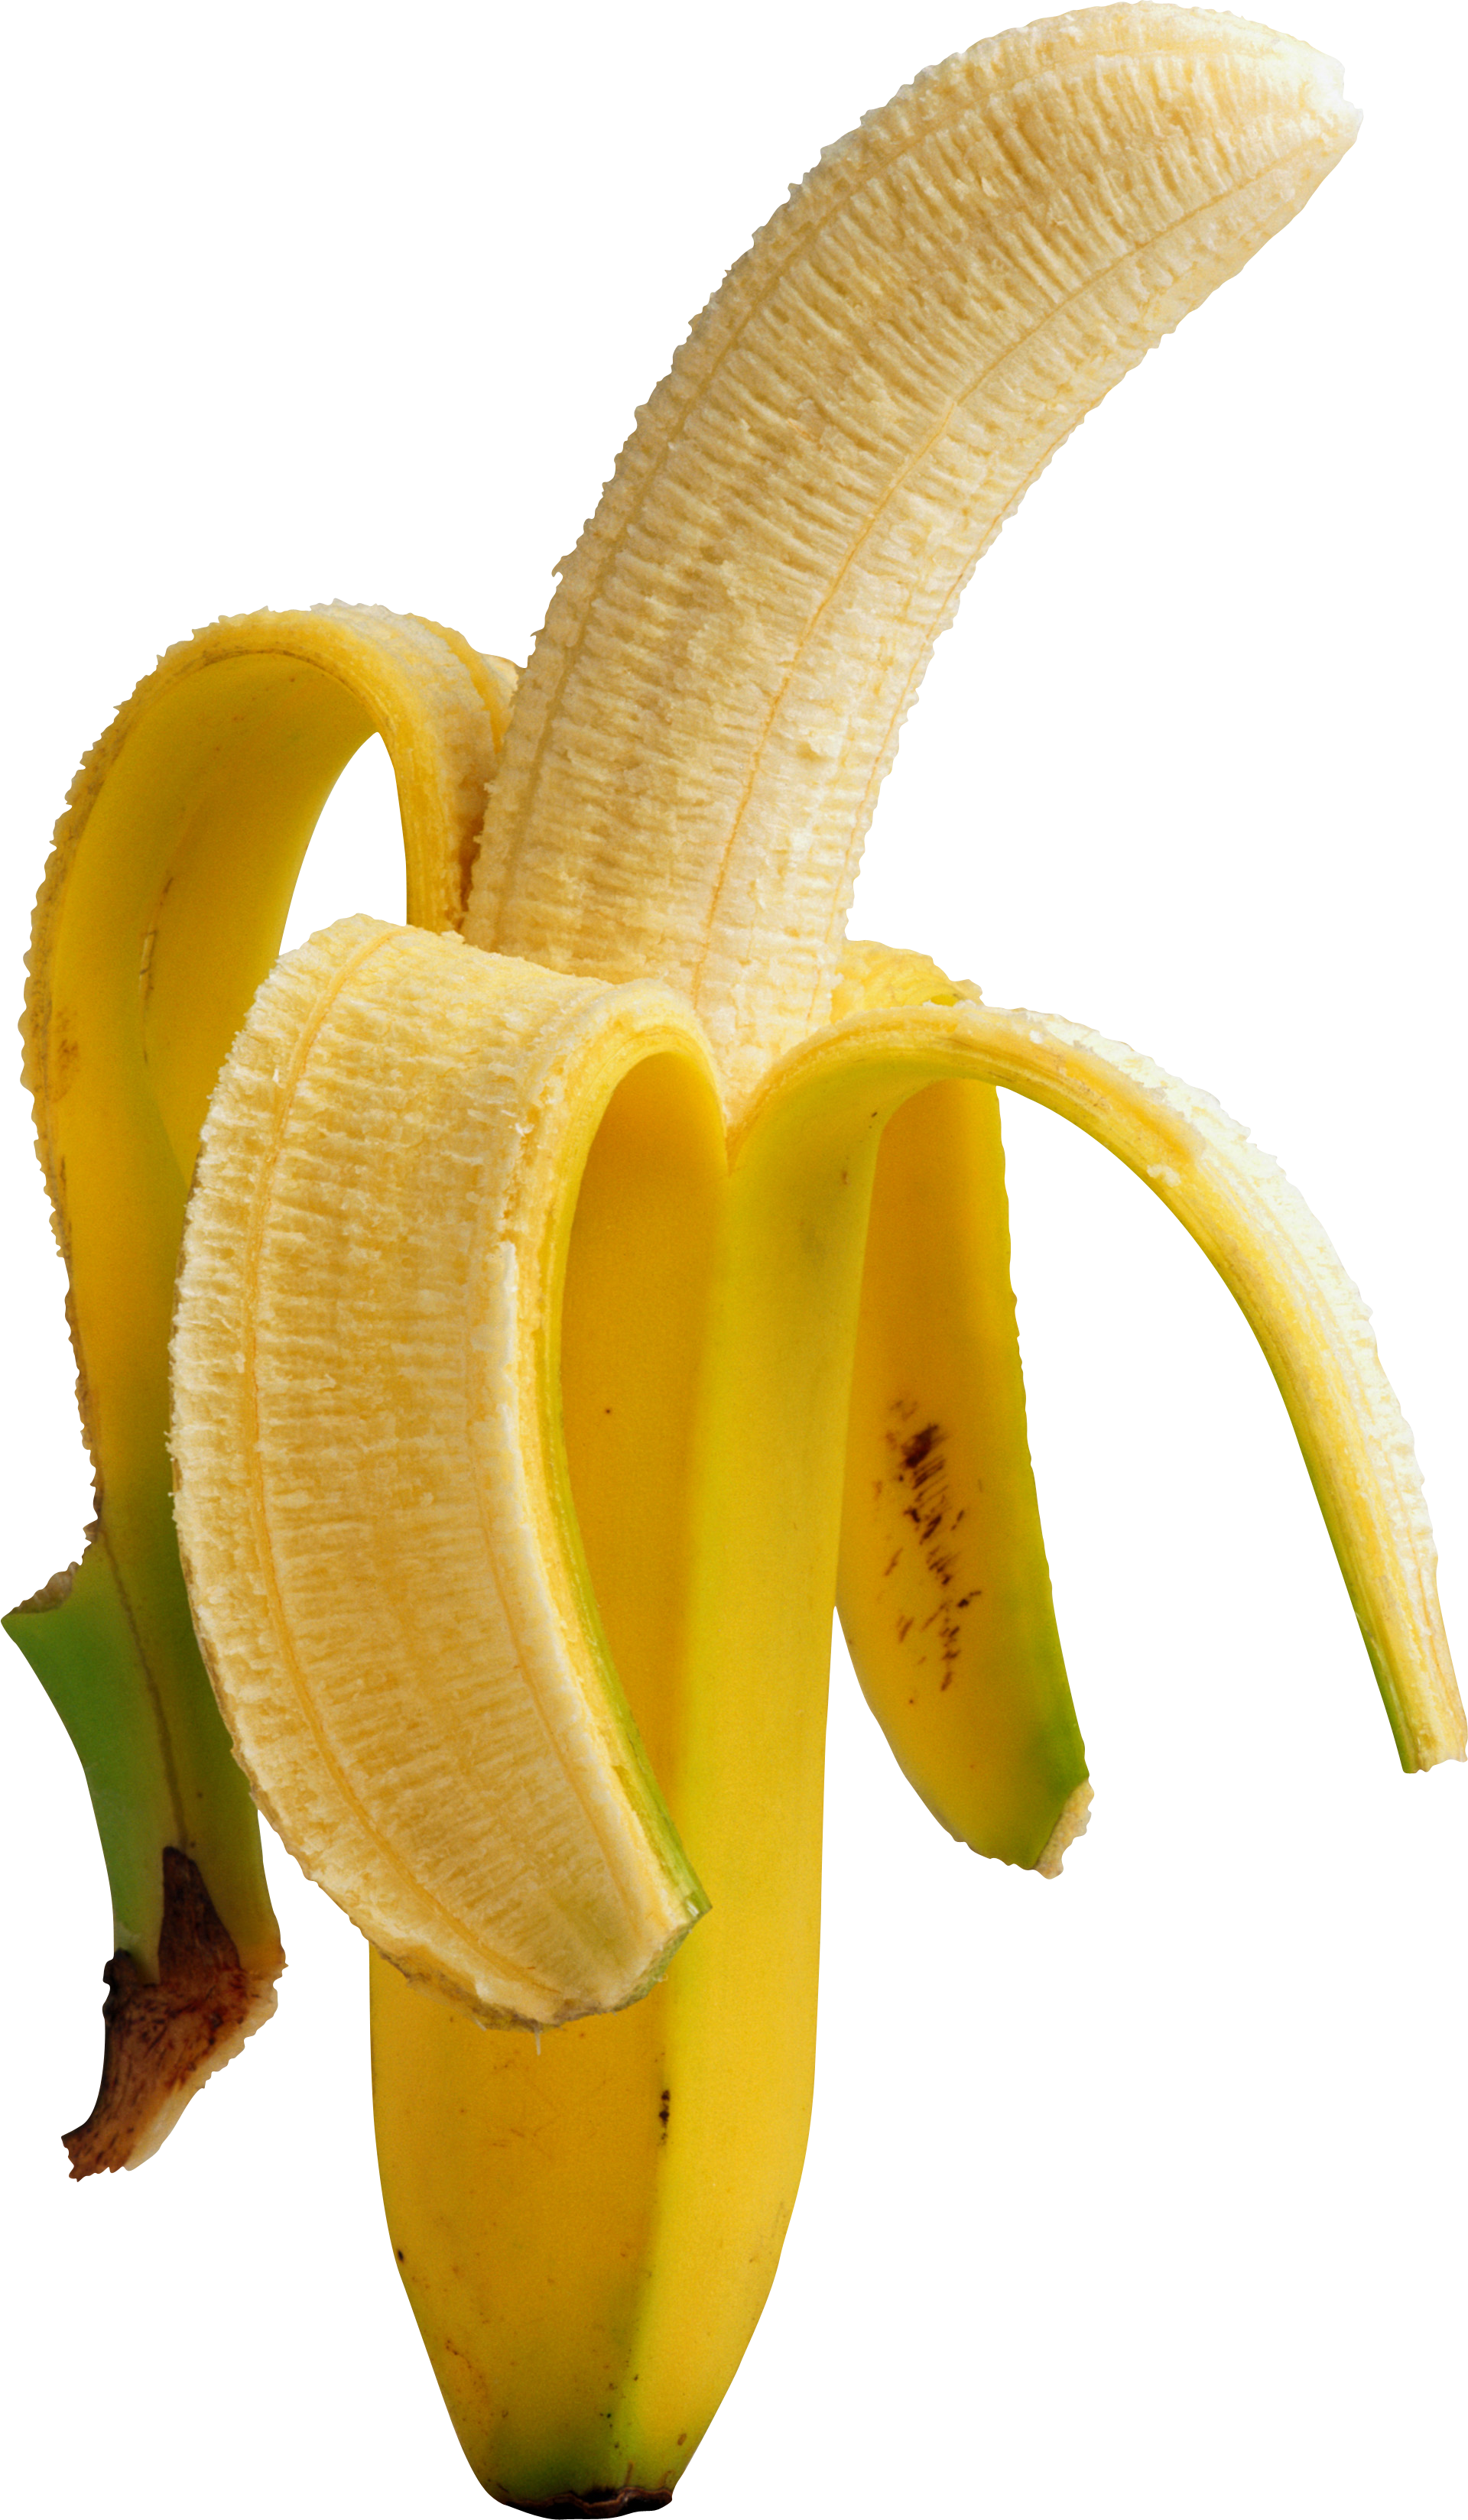 fresh banana PNG image